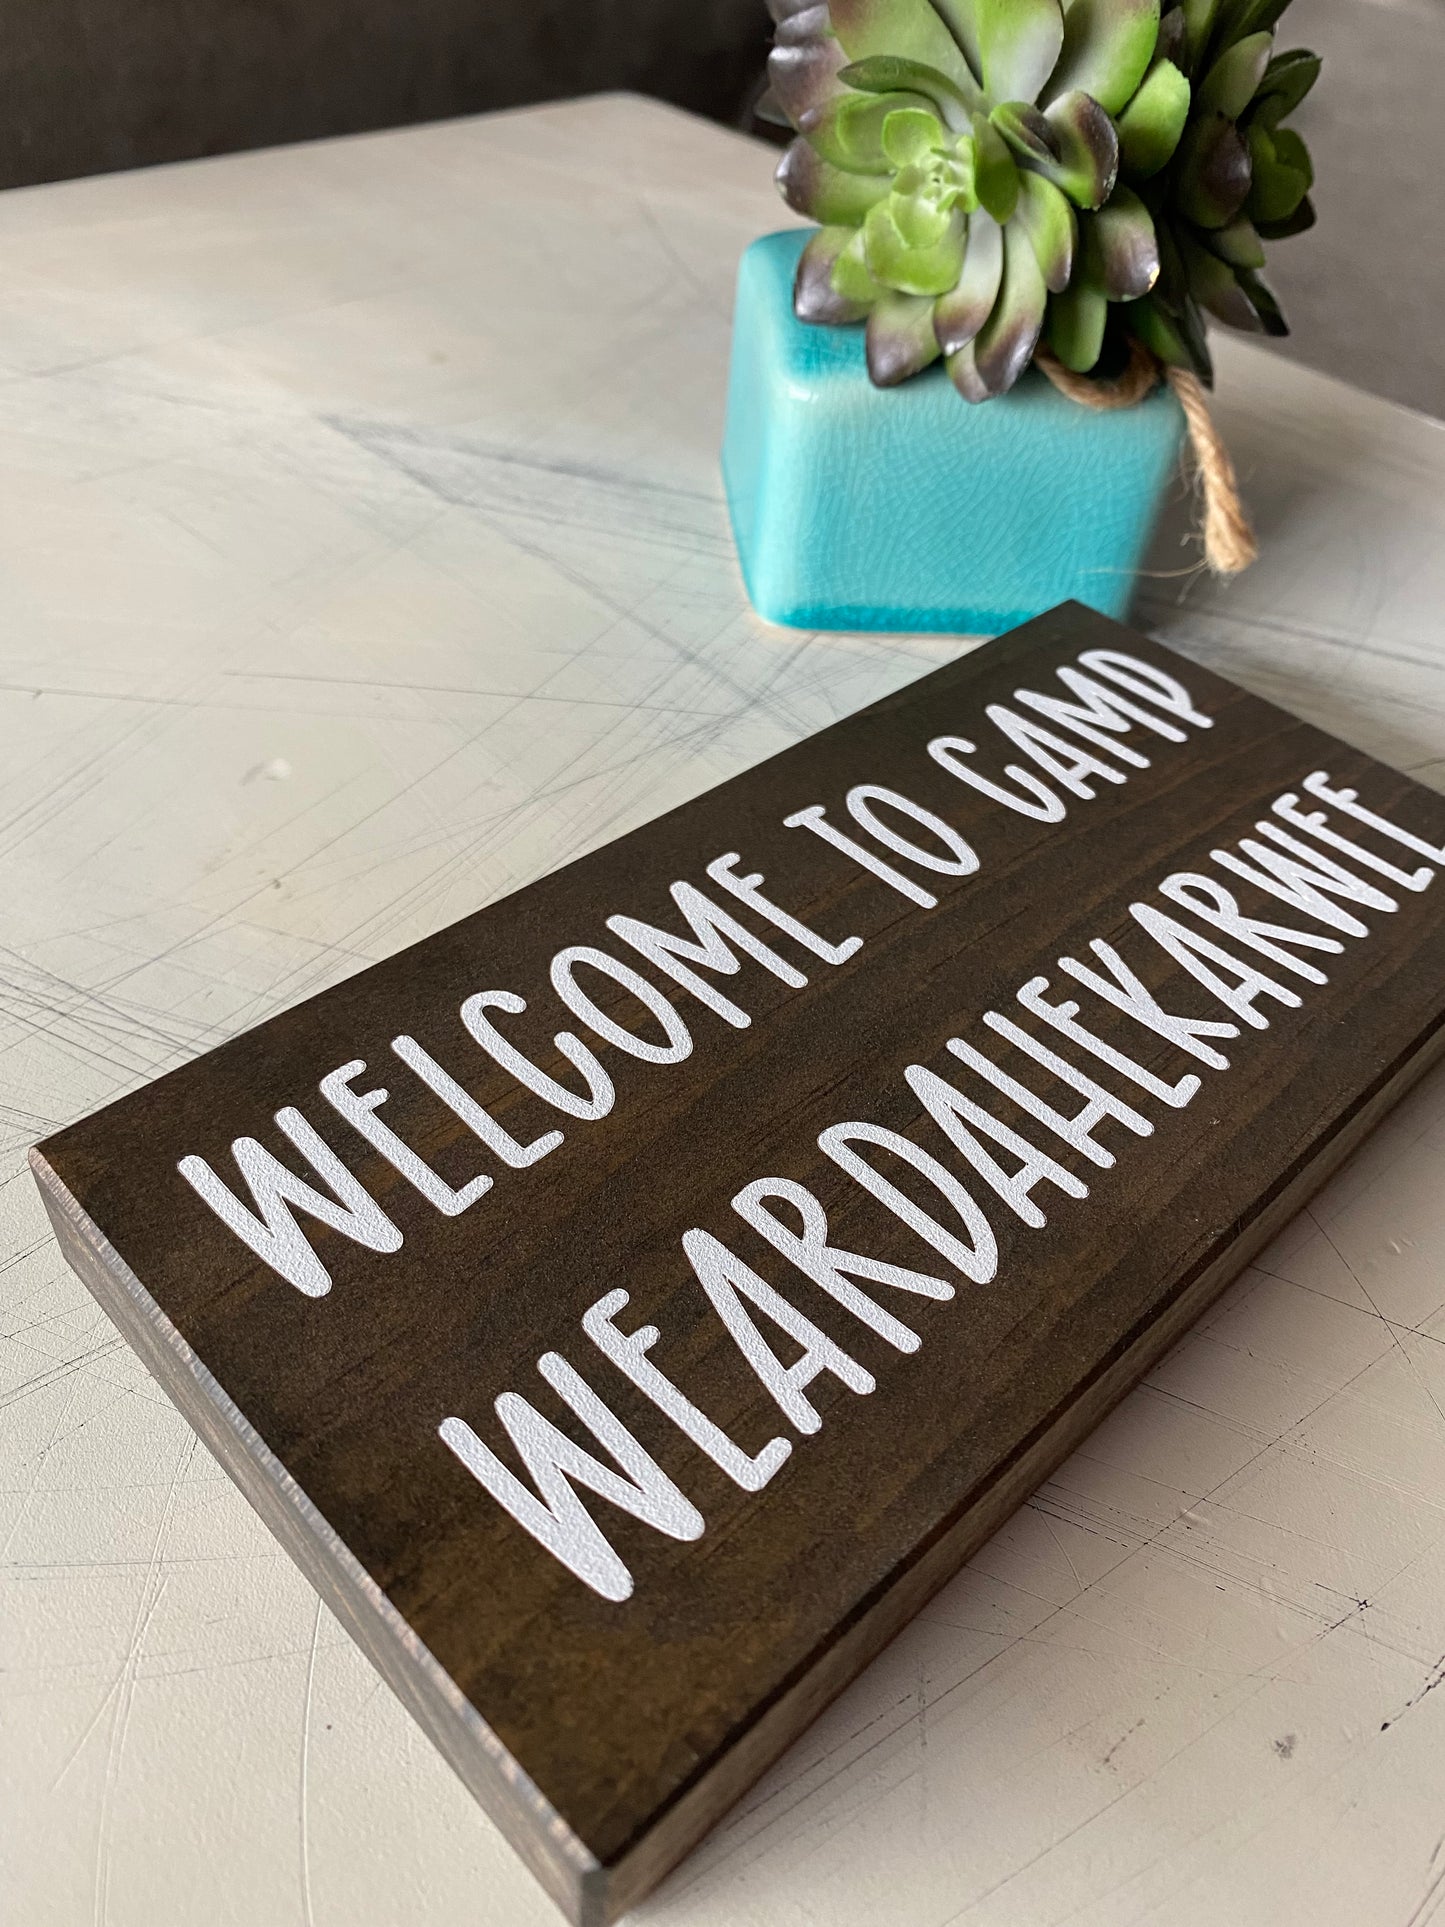 Welcome to Camp Weardahekarwee - Novotny Designs handmade mini wood sign in mocha